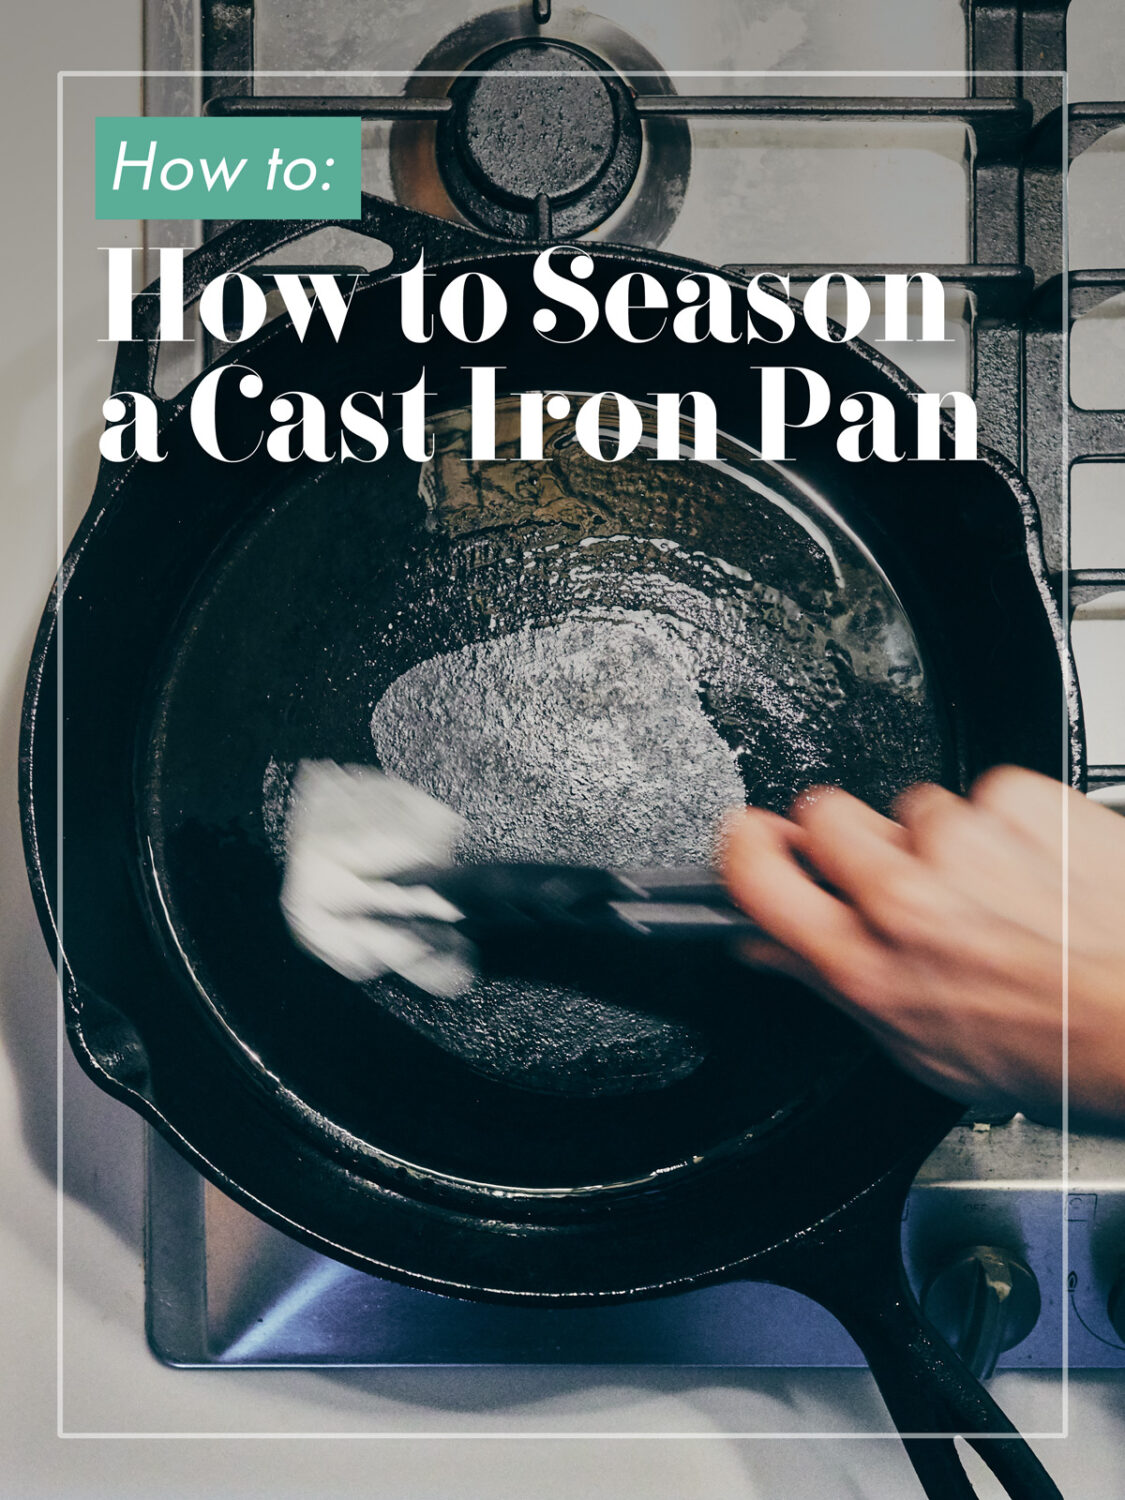 https://evergreenkitchen.ca/wp-content/uploads/2021/12/How-to-Season-A-Cast-Iron-Pan-Cover-evergreen-kitchen-1125x1500.jpg